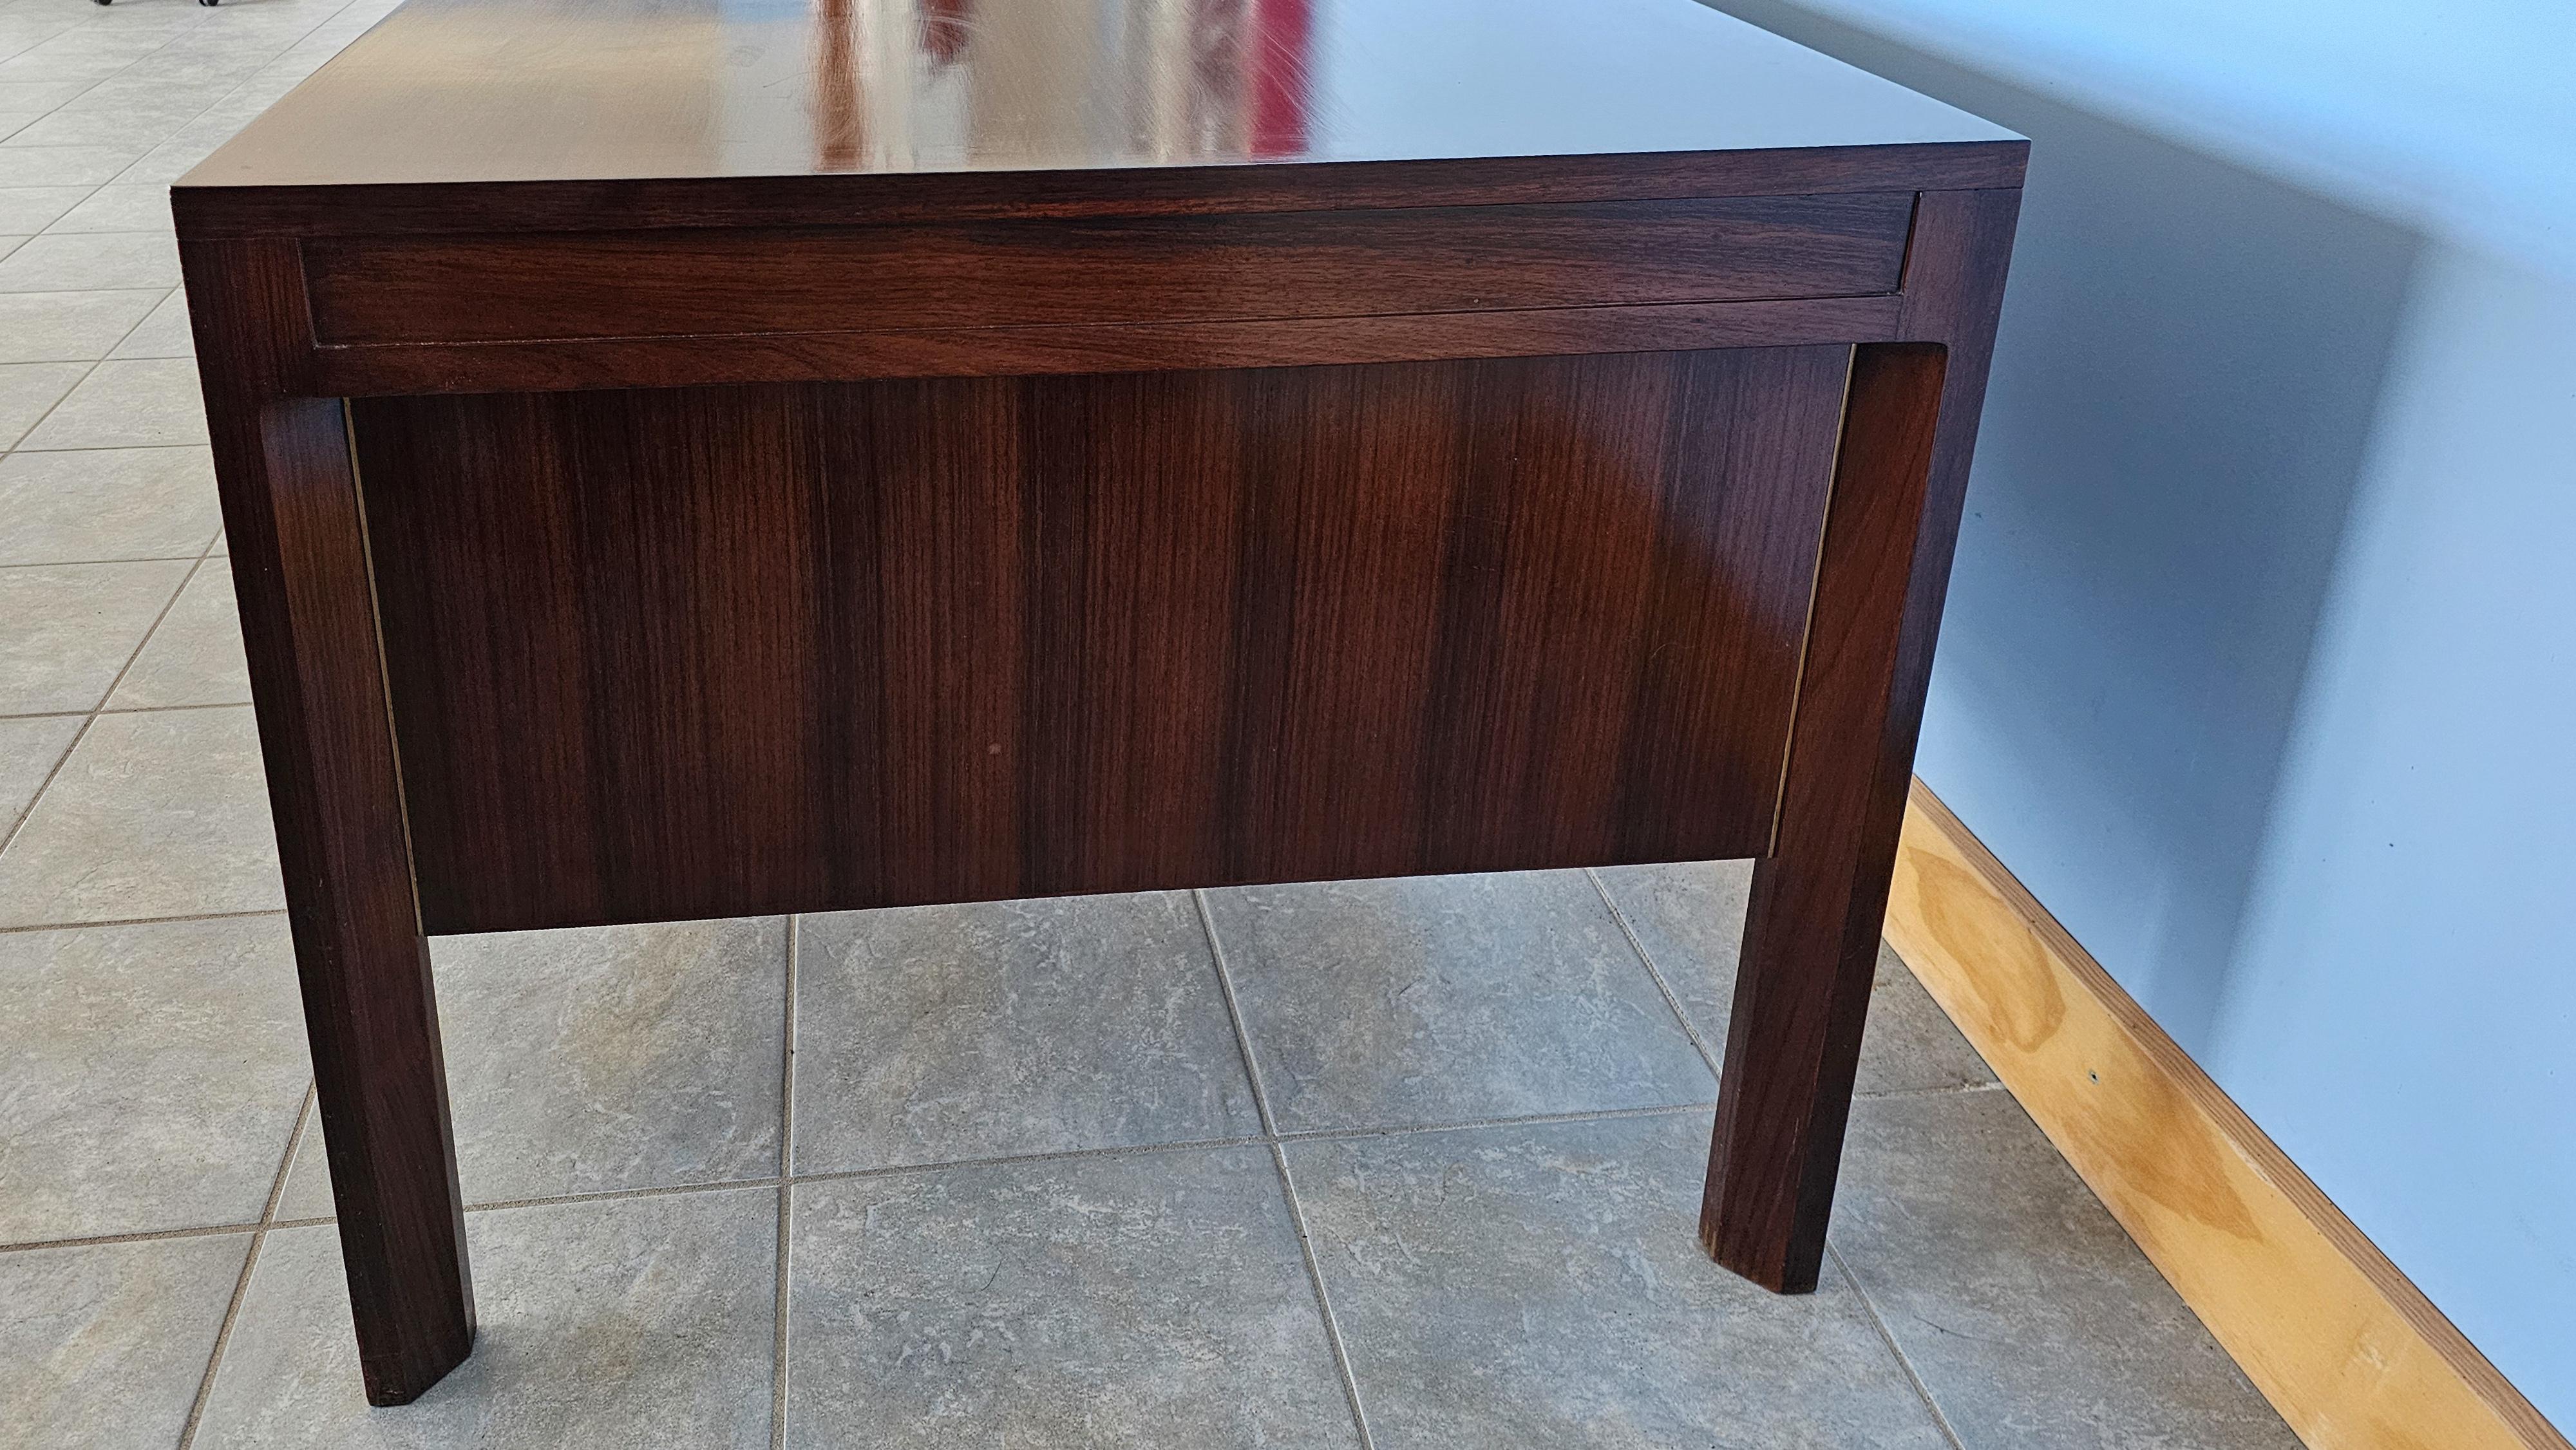 Anonima Castelli Palisander Wood Desk with Elegant Metal Insert Handle, 1970s For Sale 3